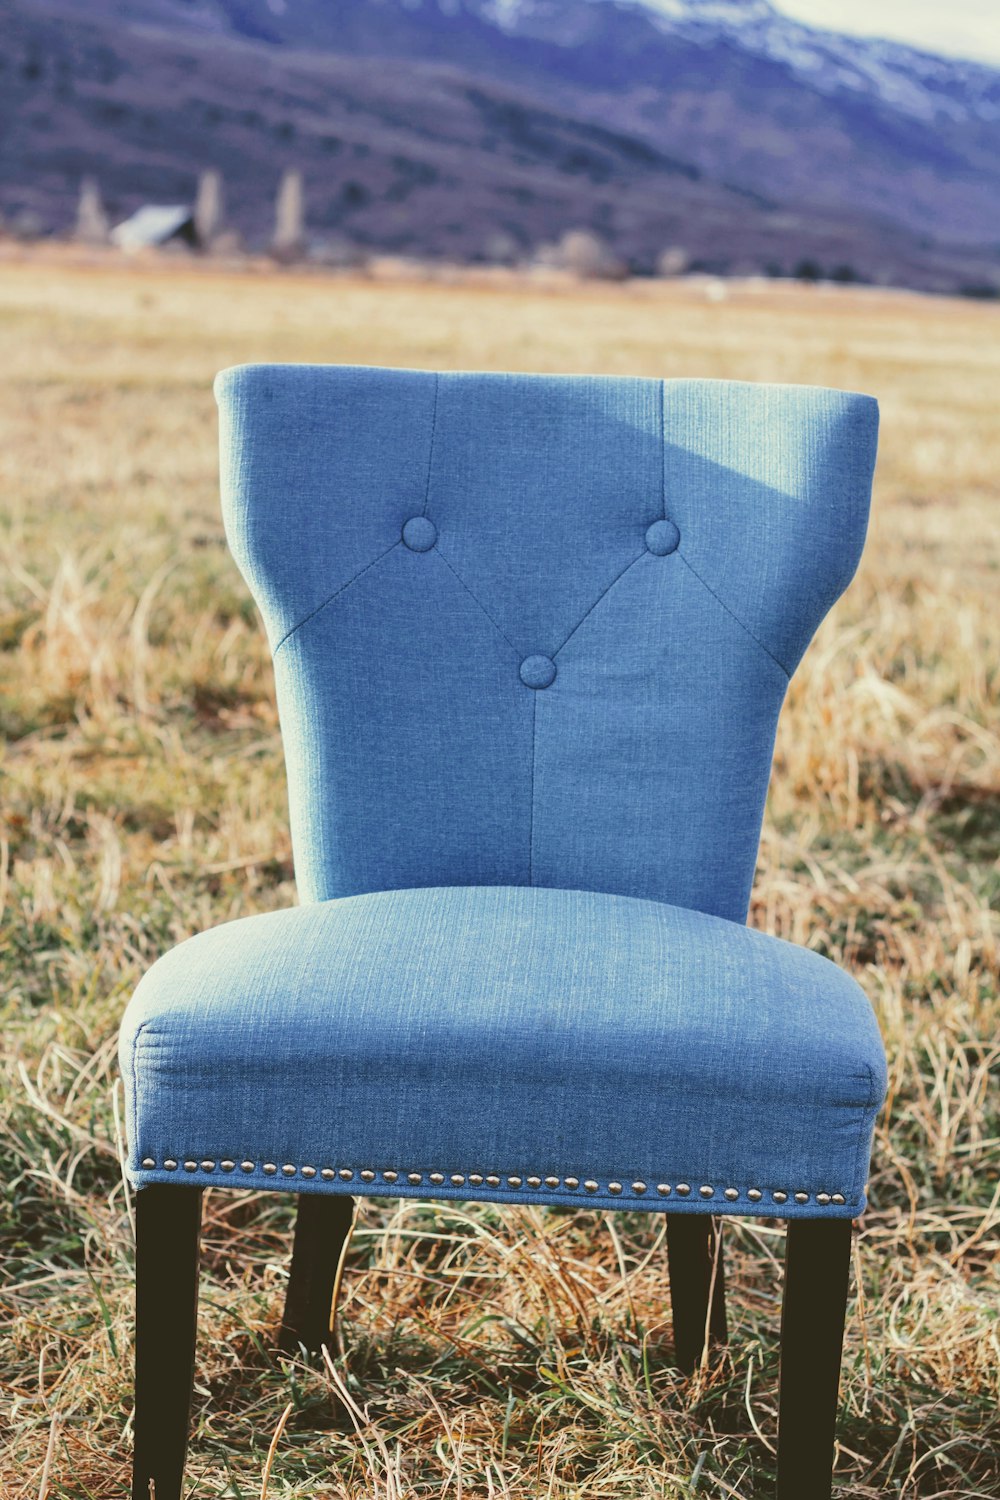 getufteter blauer, gepolsterter, armloser Stuhl tagsüber auf dem Feld